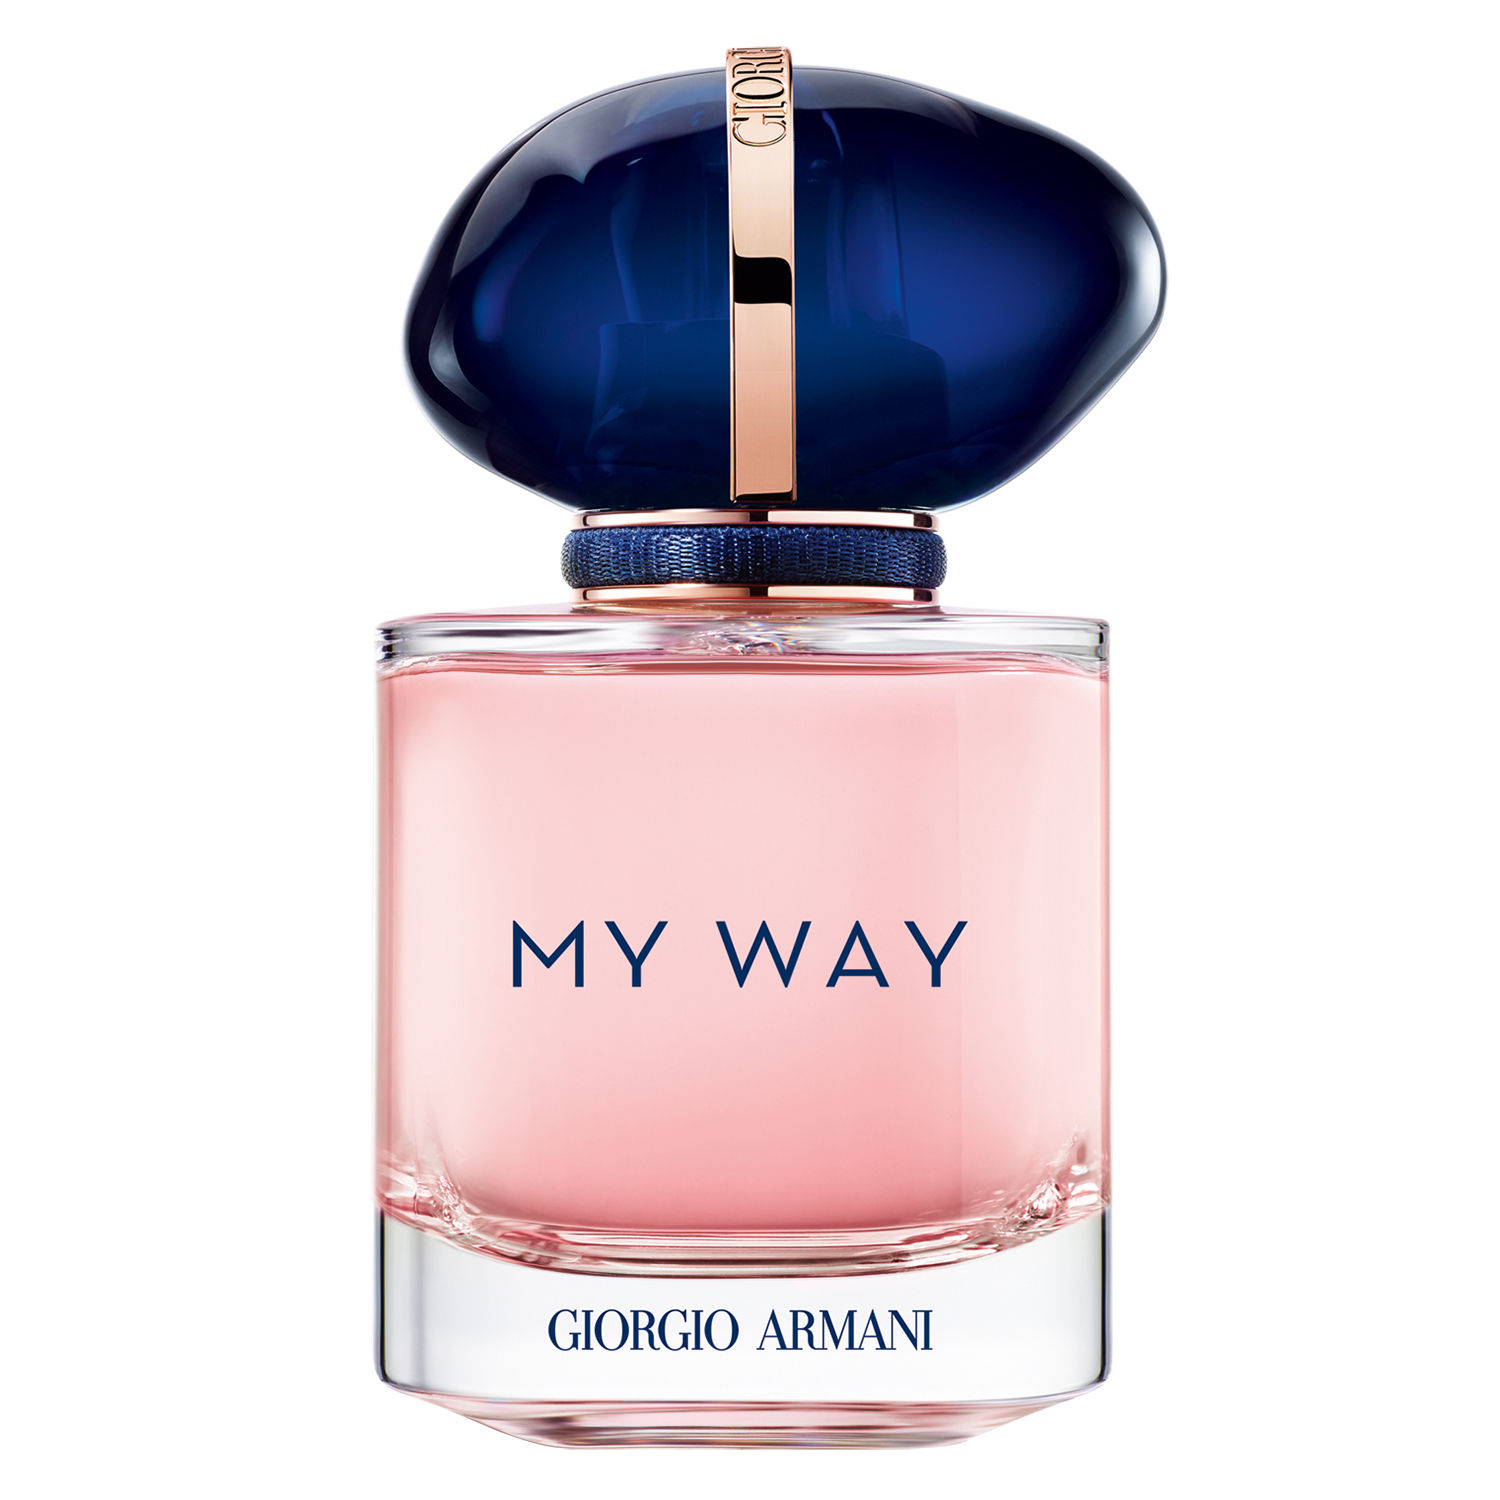 Giorgio Armani My Way eau de parfum spray 30 ml